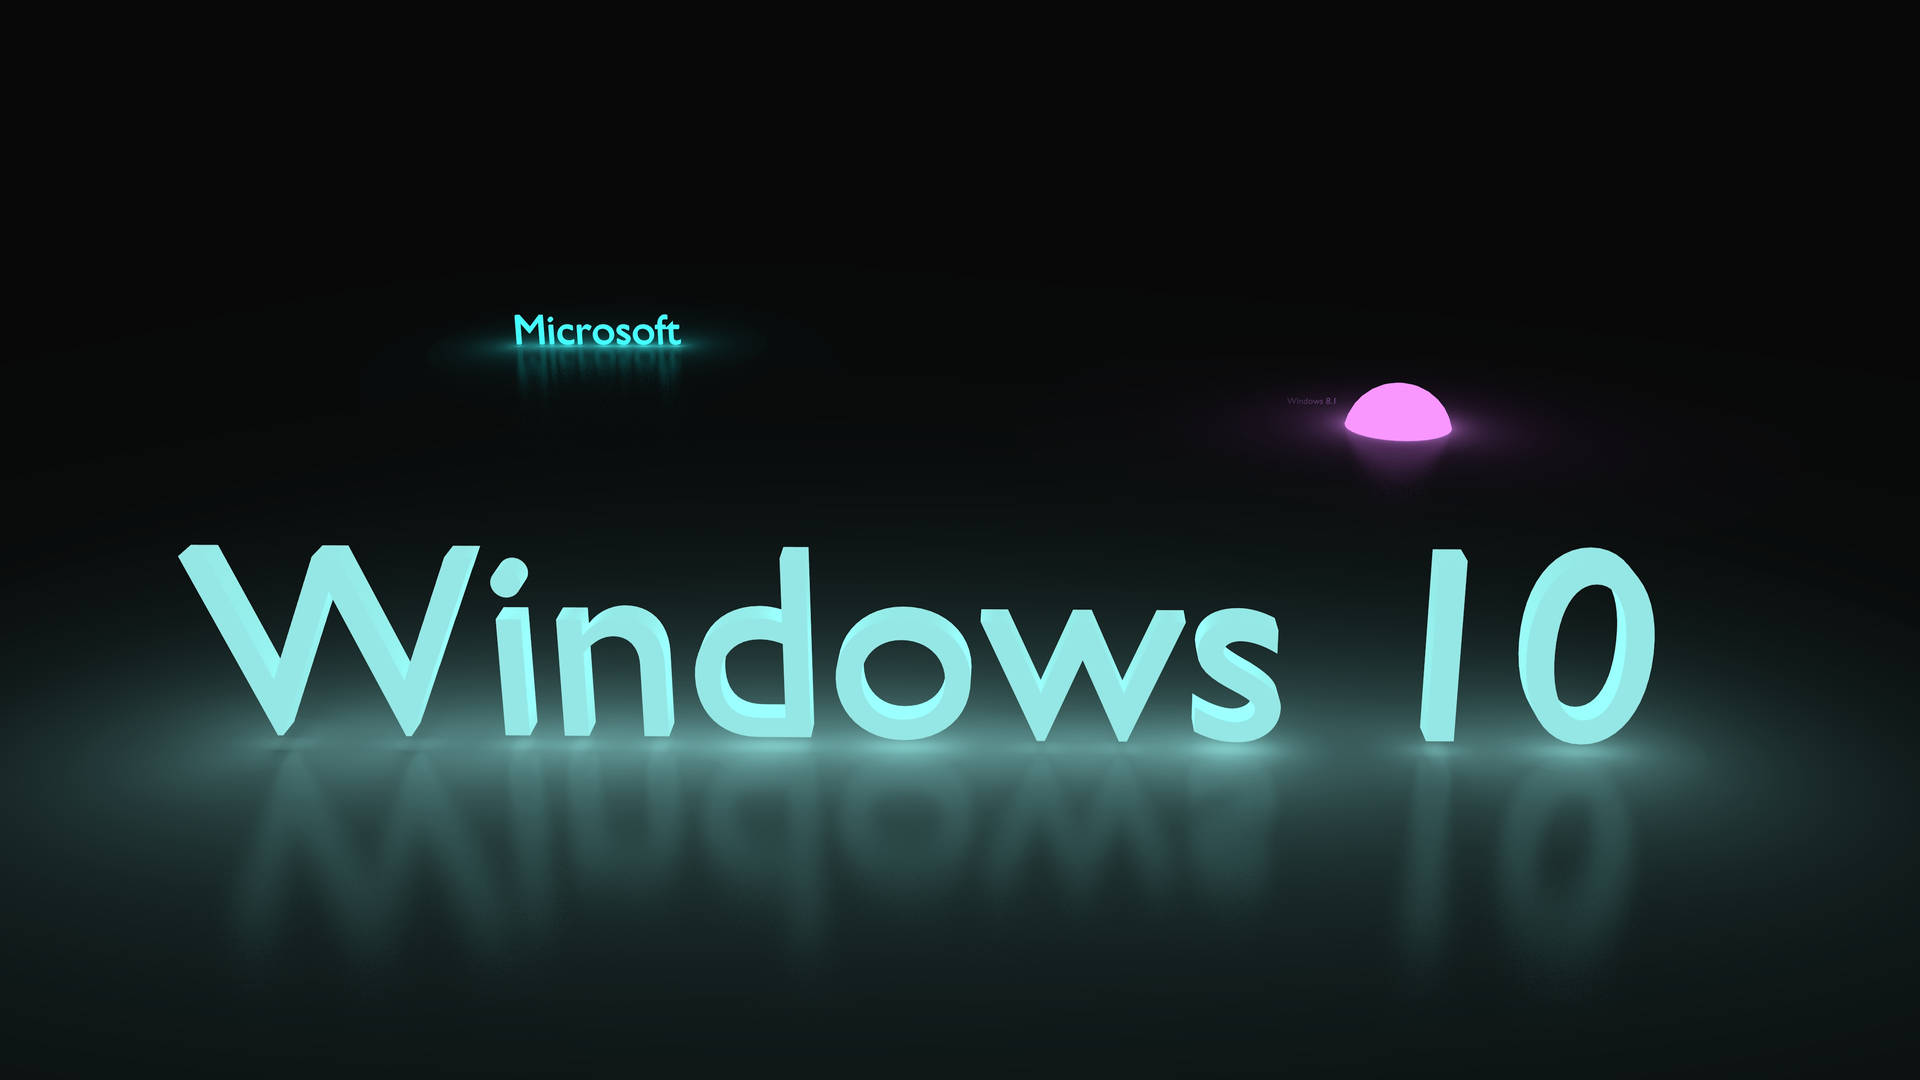 Windows 10 Hd Icy Blue Background